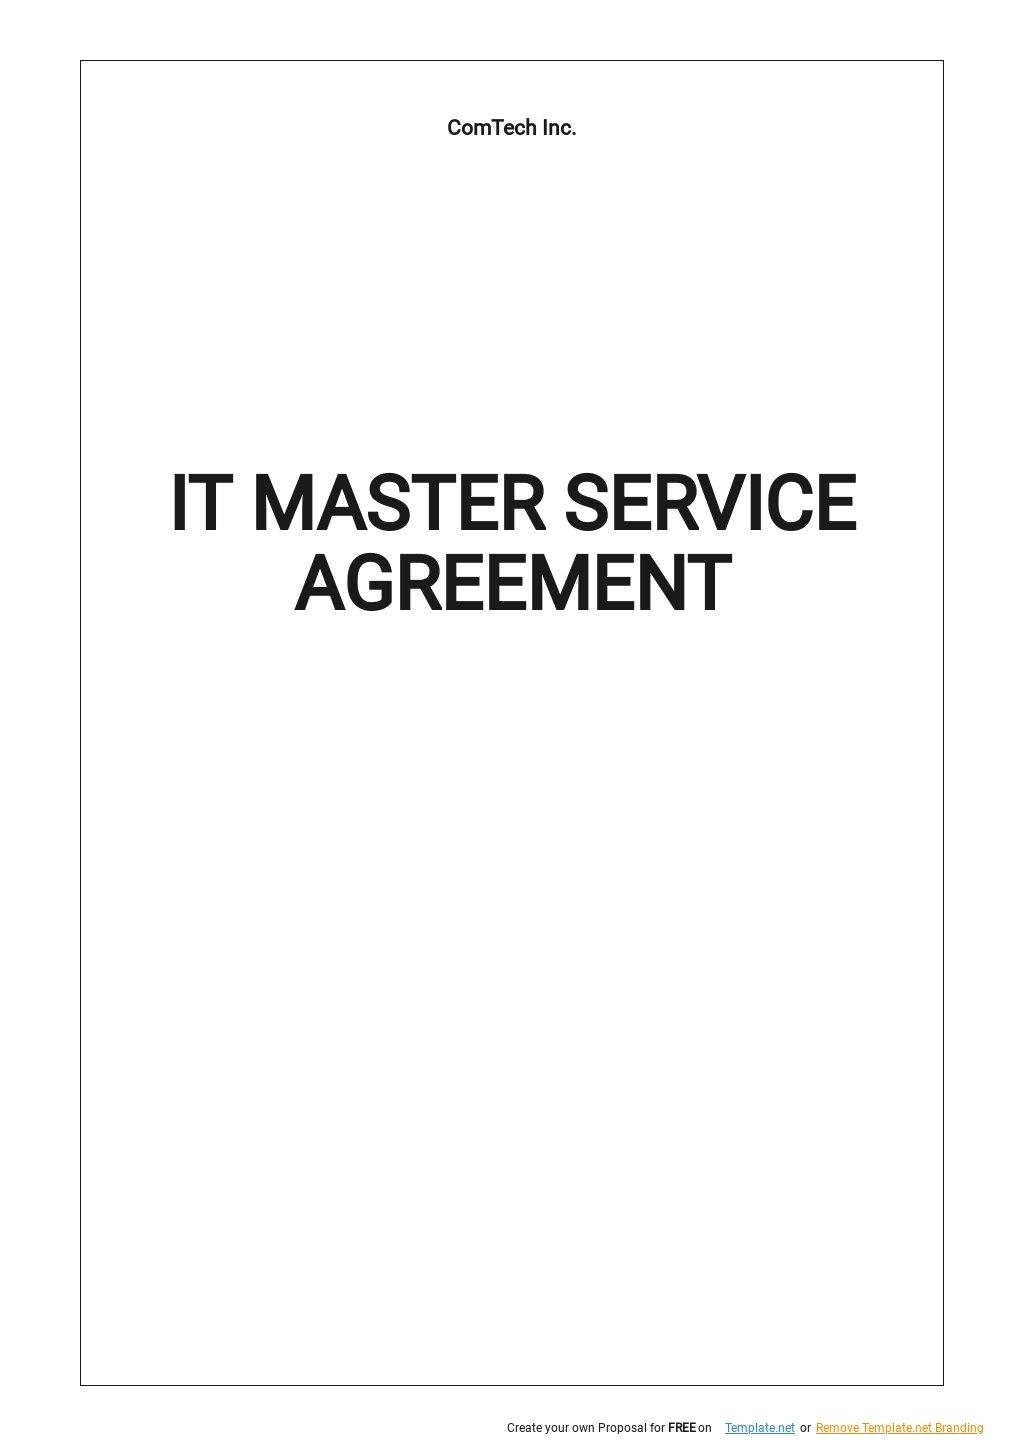 IT Master Service Agreement Template.jpe